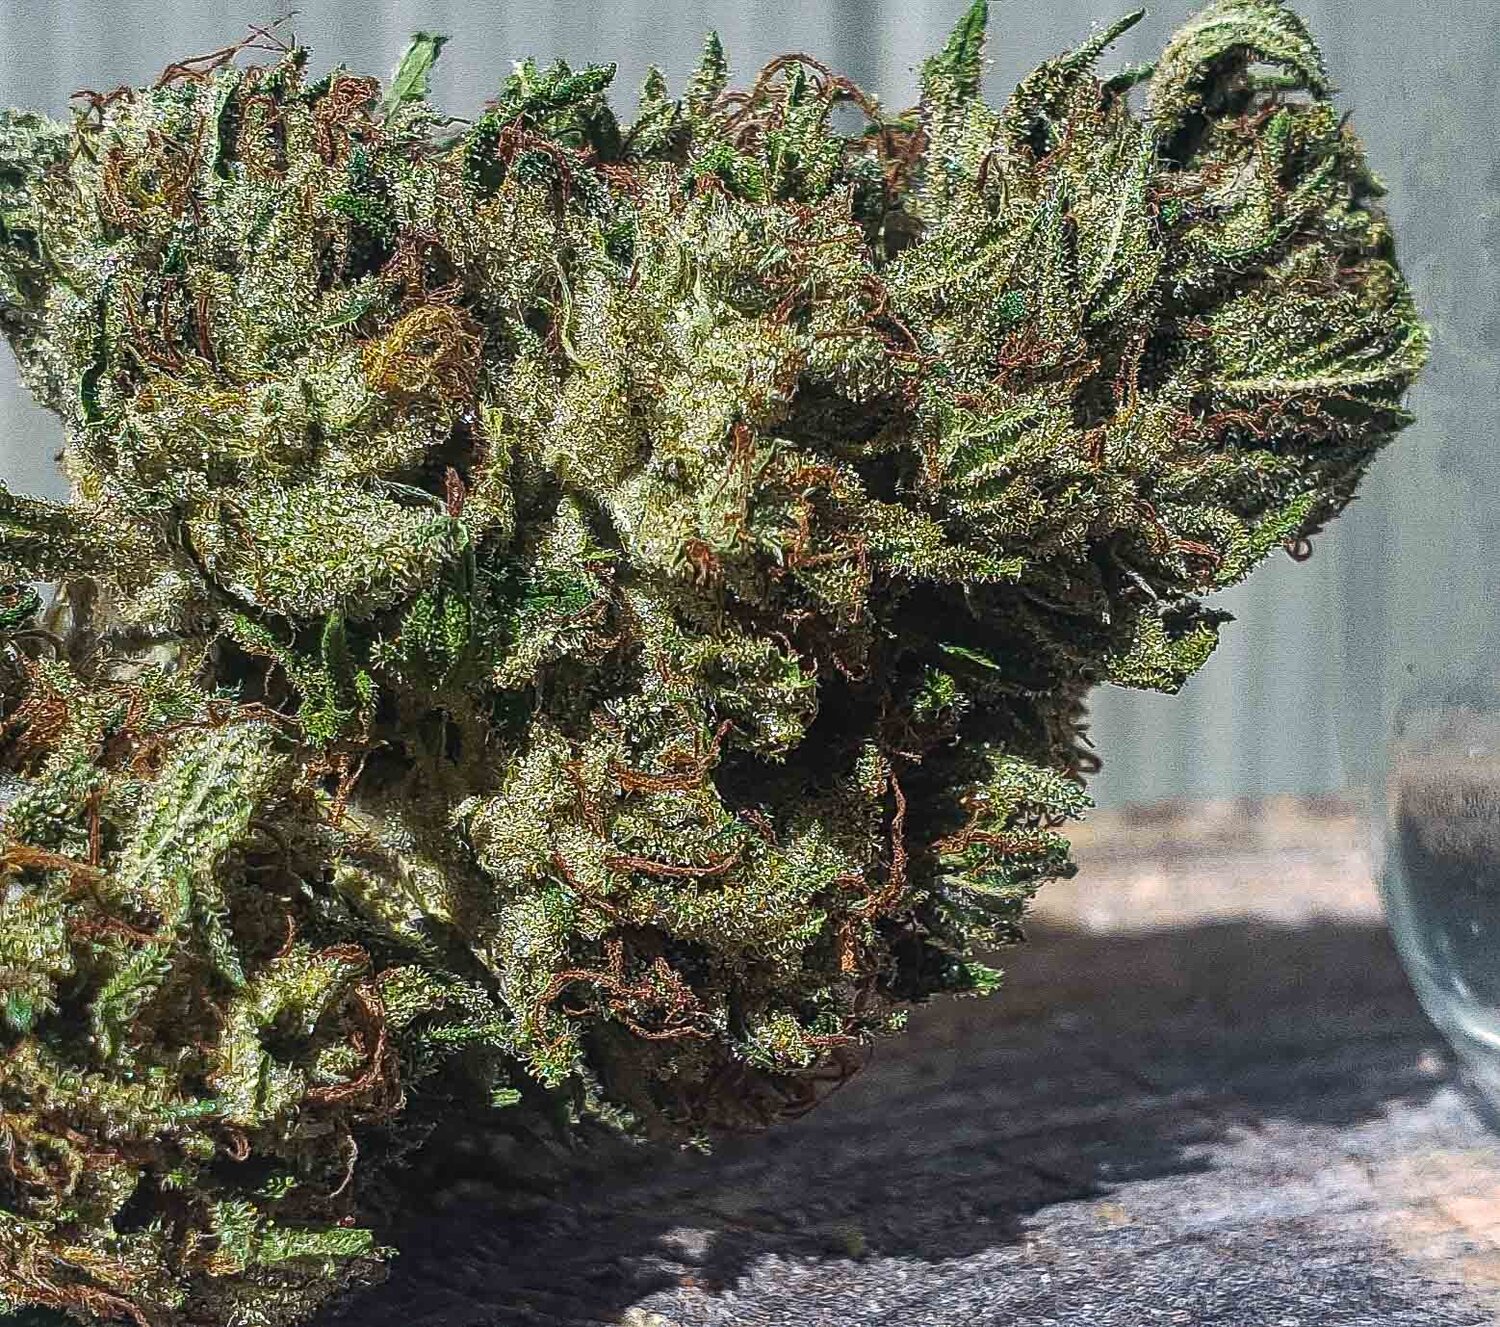 Triangle Kush Cannabis Seeds Info